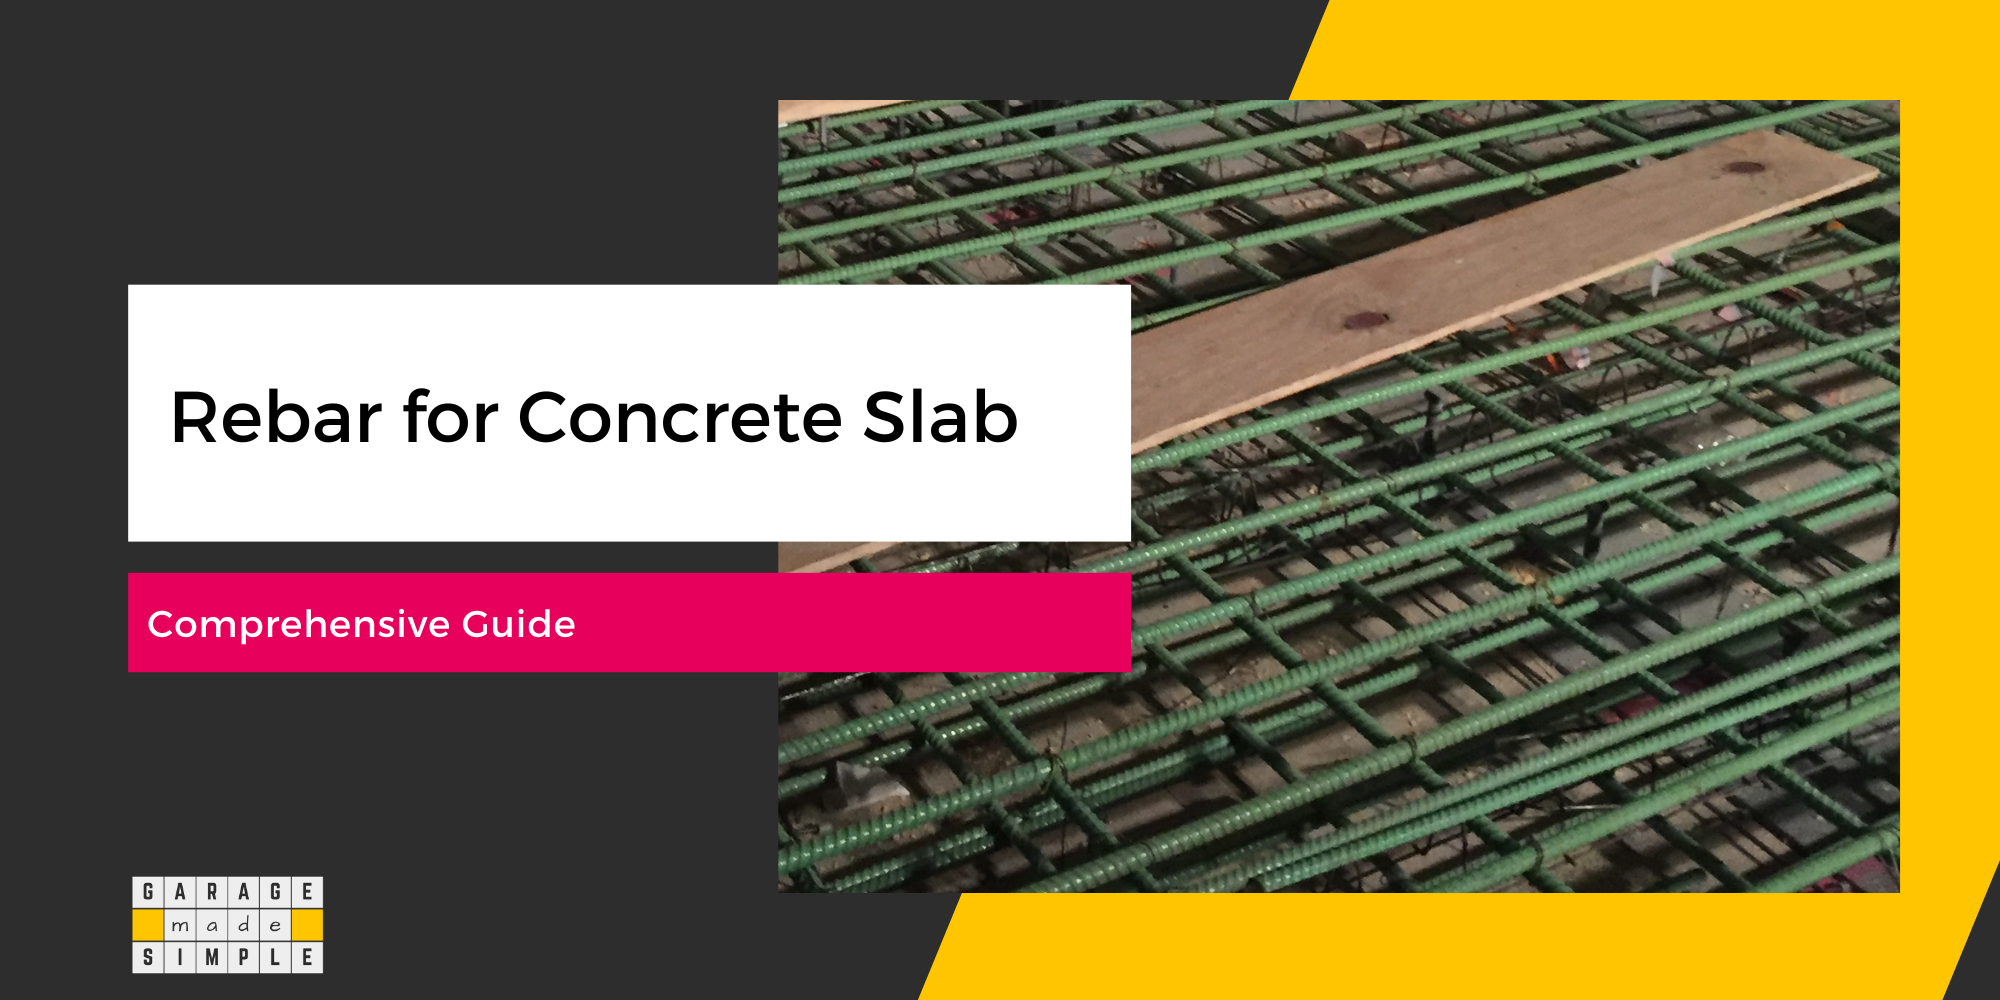 Rebar for Concrete Slab: Comprehensive Guide